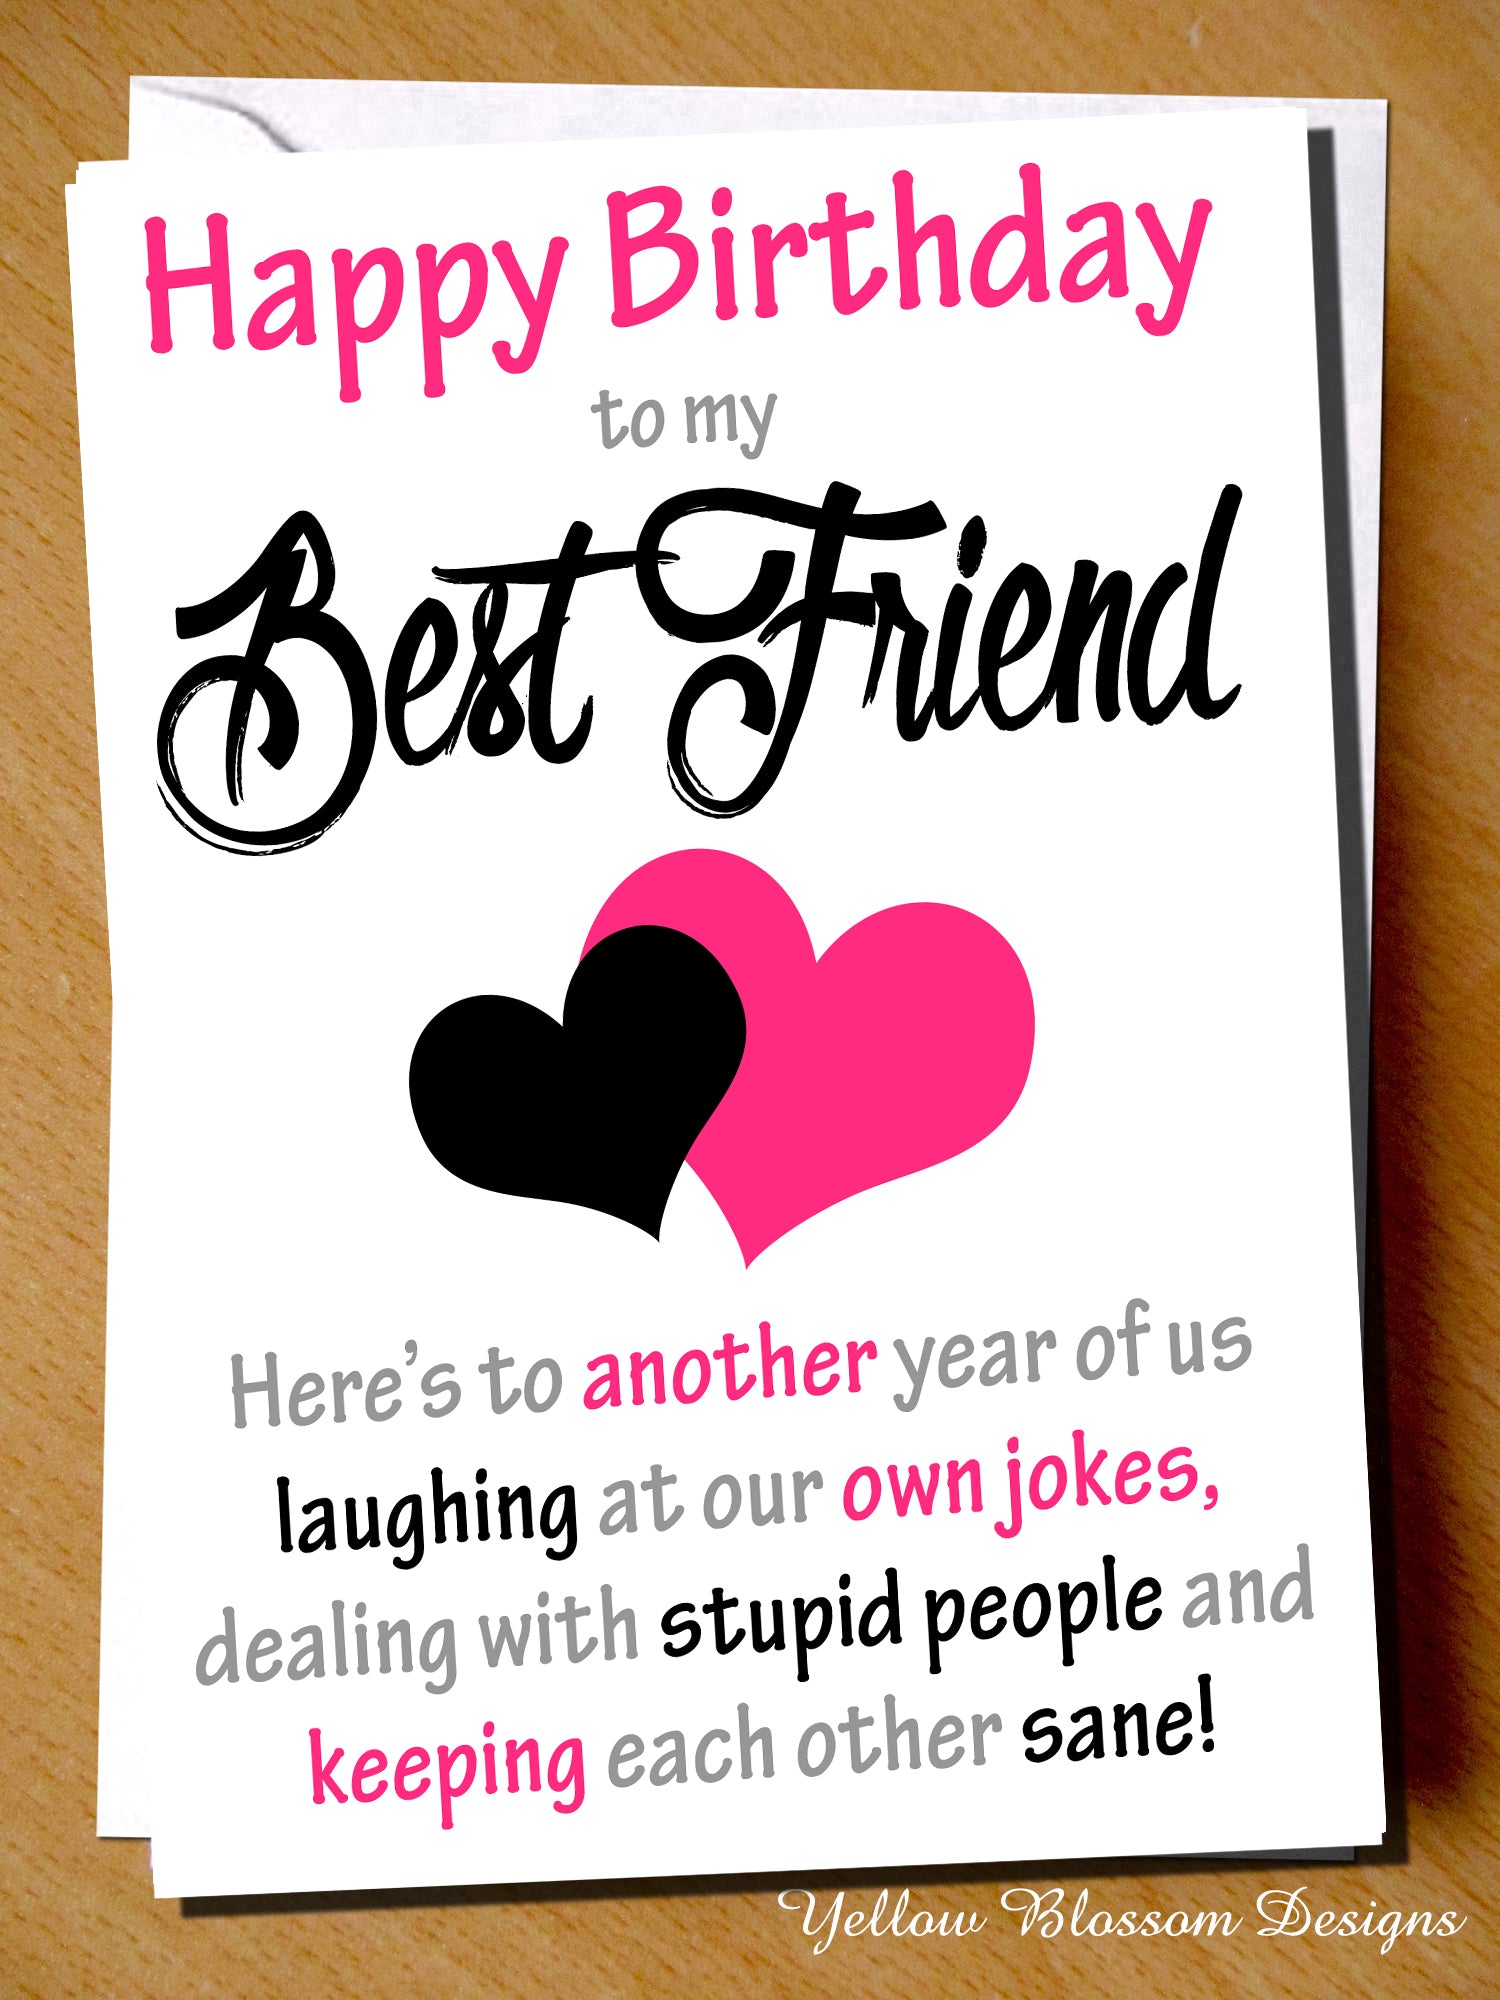 Happy Birthday Card To My Best Friend ~ Own Jokes Stupid People Sane ...